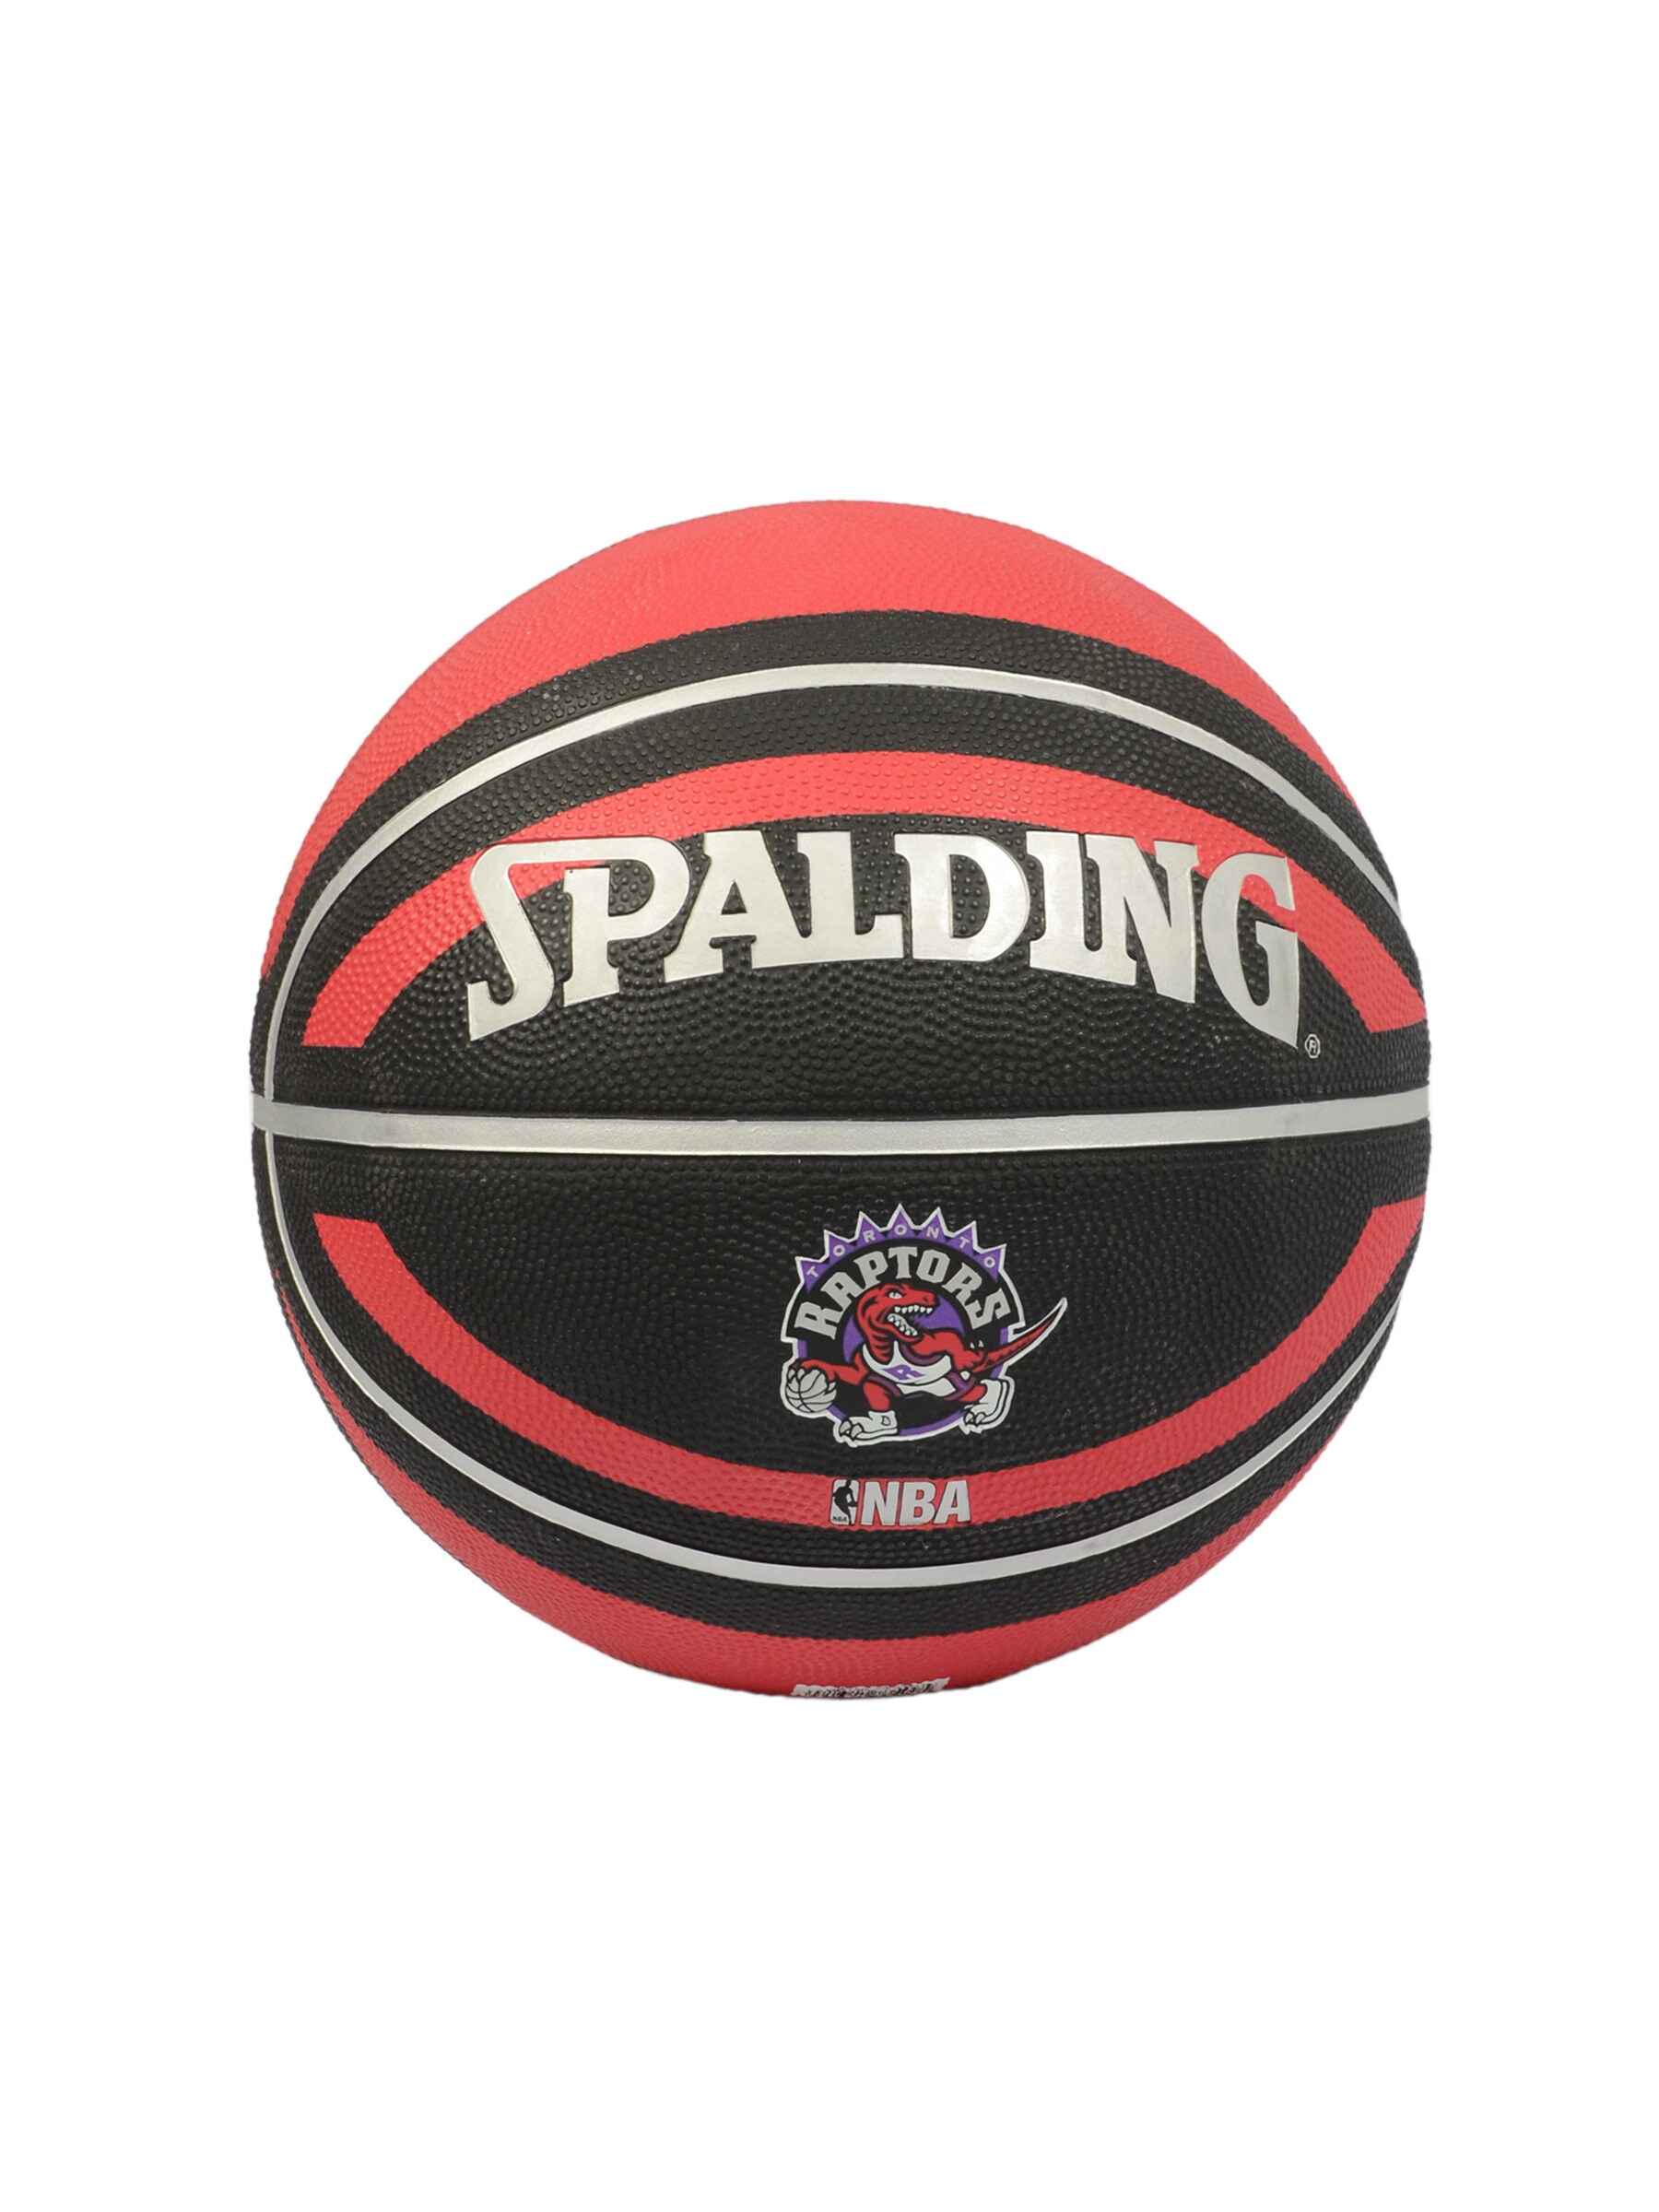 Spalding Unisex NBA Team Raptors SZ7 Red Basketball